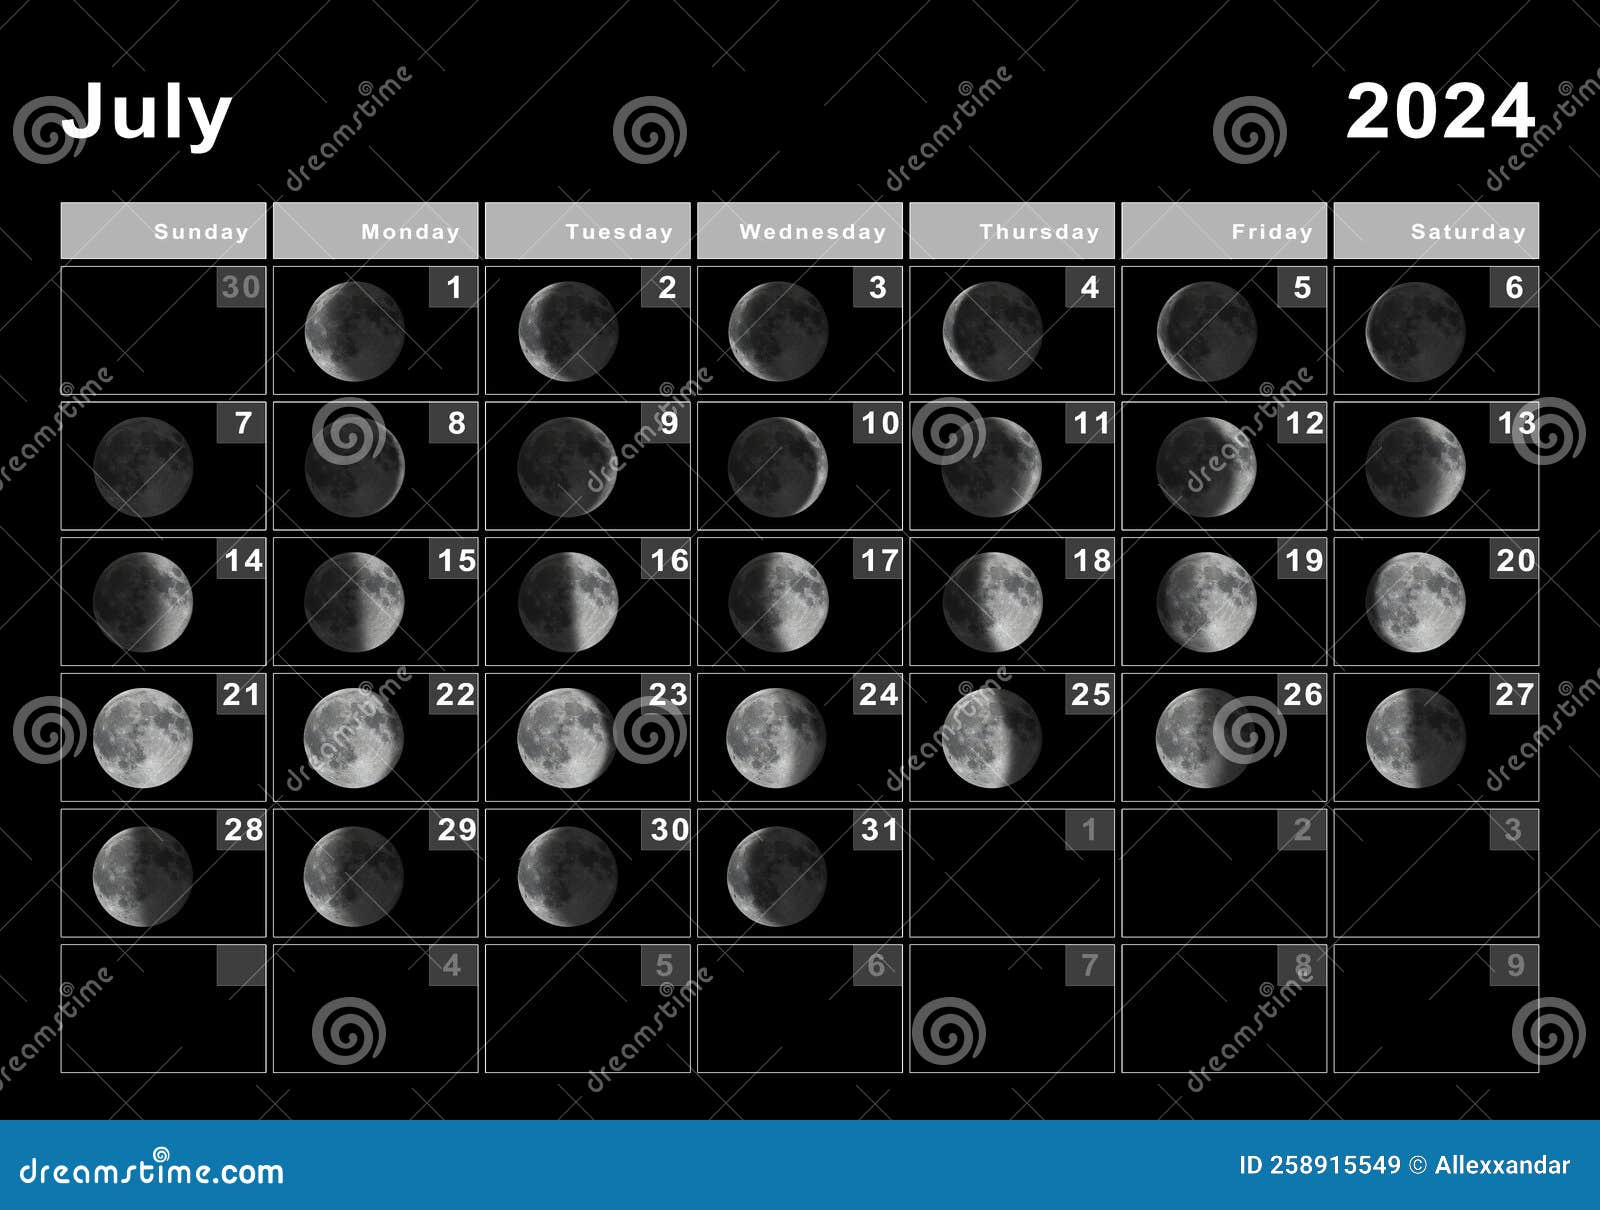 July 2024 Lunar Calendar, Moon Cycles Stock Illustration for July 2024 Moon Calendar